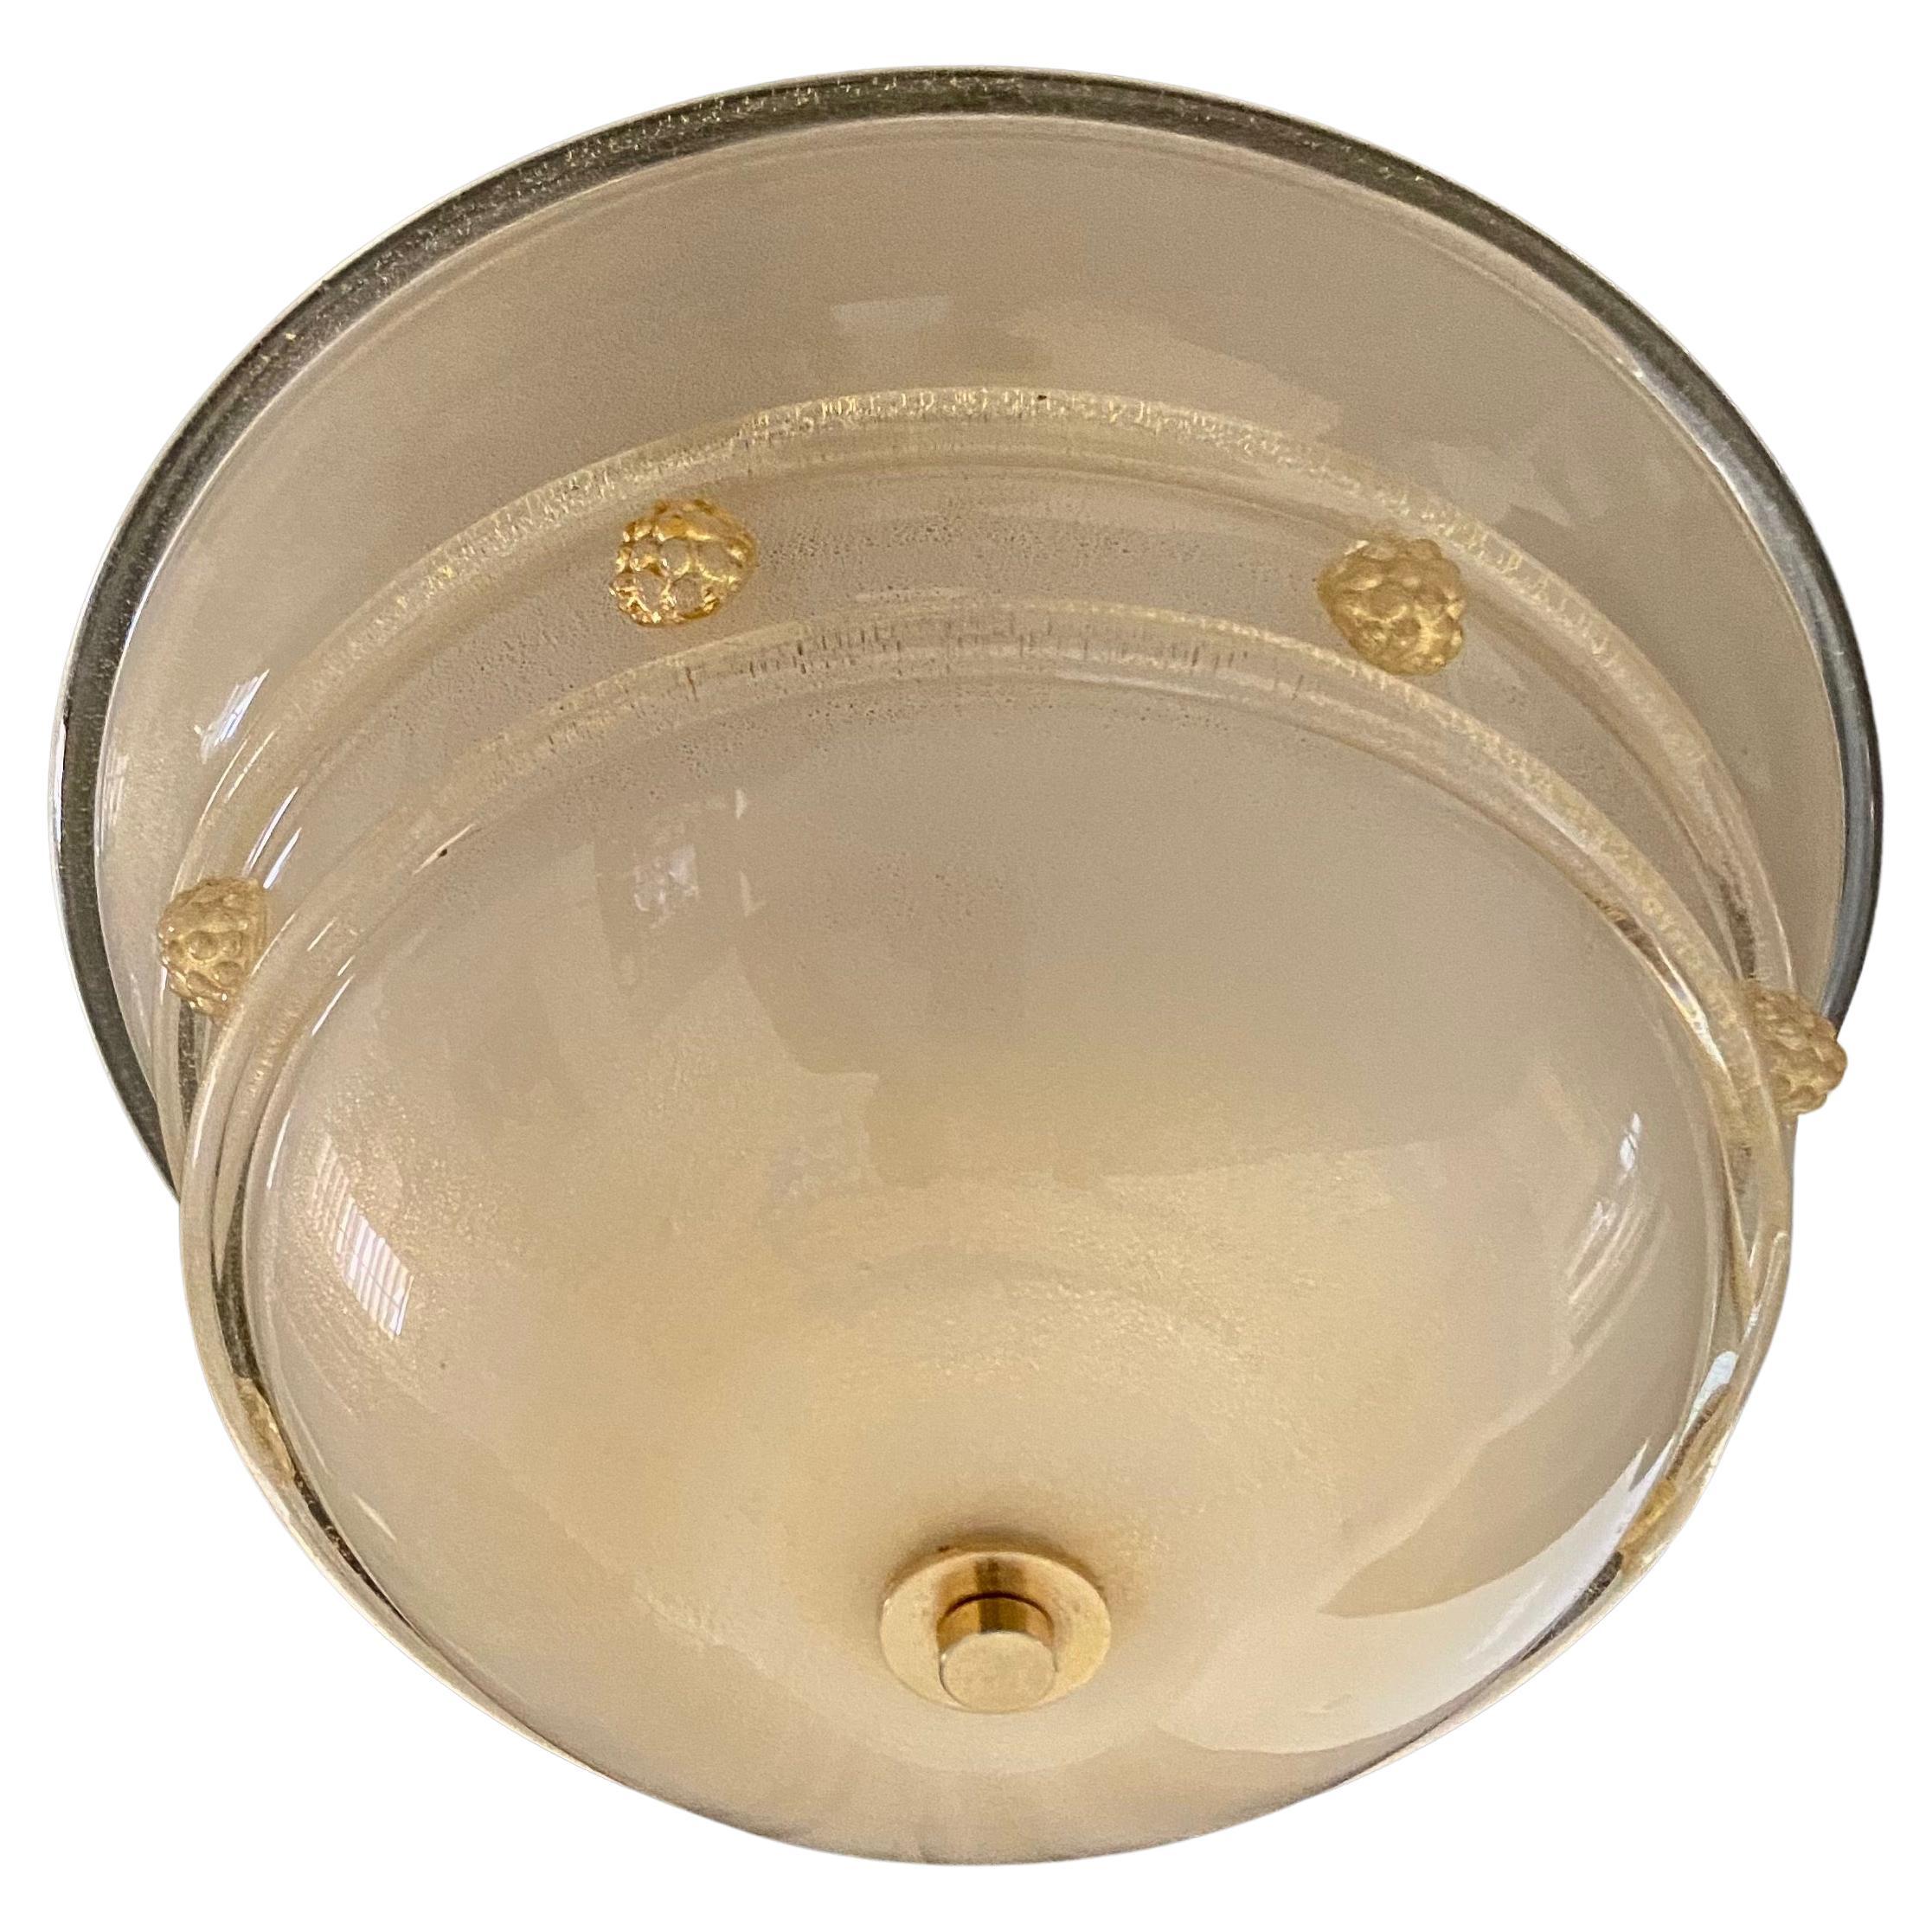 Barovier Murano Glass Gold Infused Flush Mount Ceiling Light